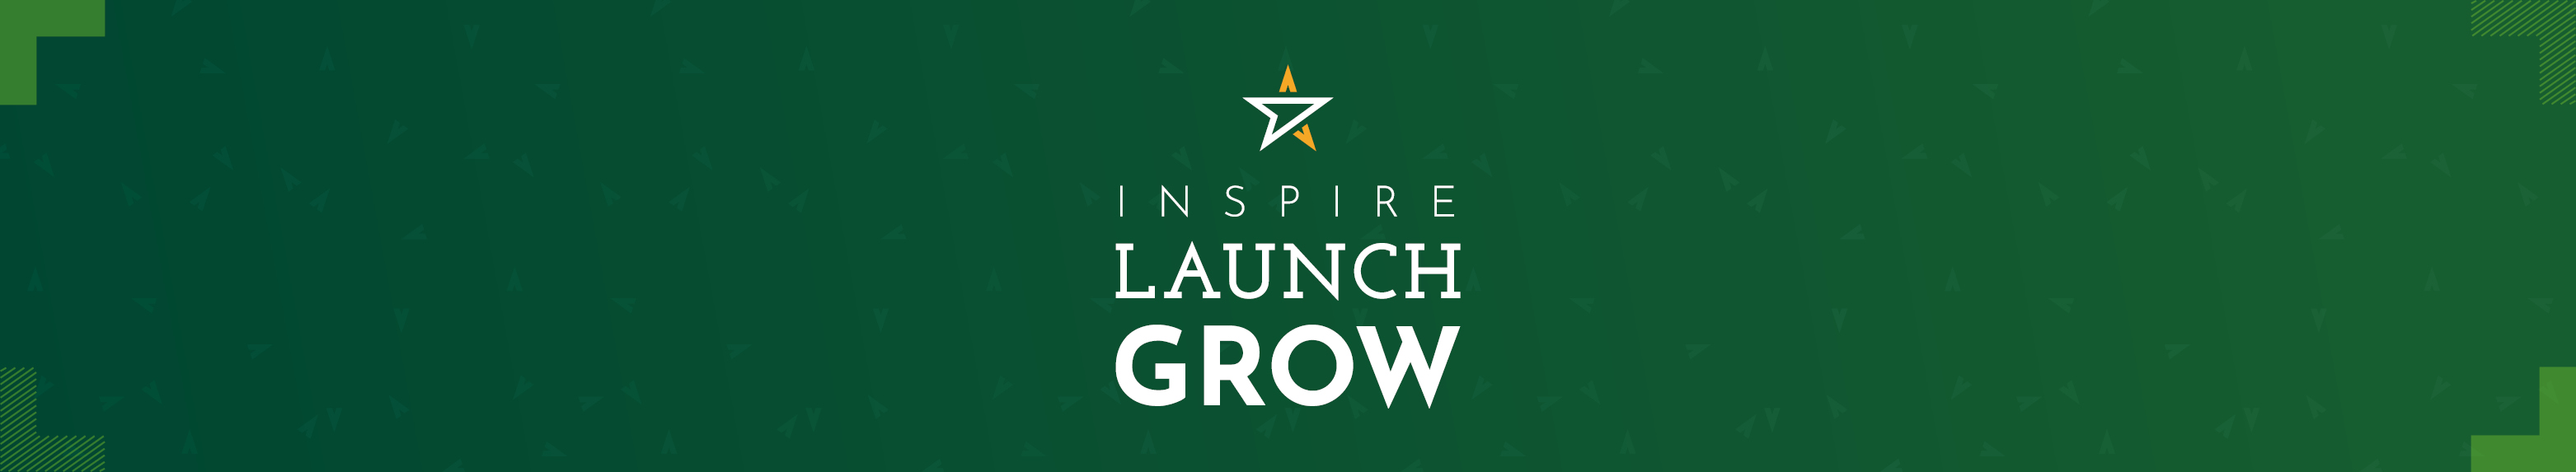 24ILG_Inspire_Launch_Grow_Web_Banner2.jpg